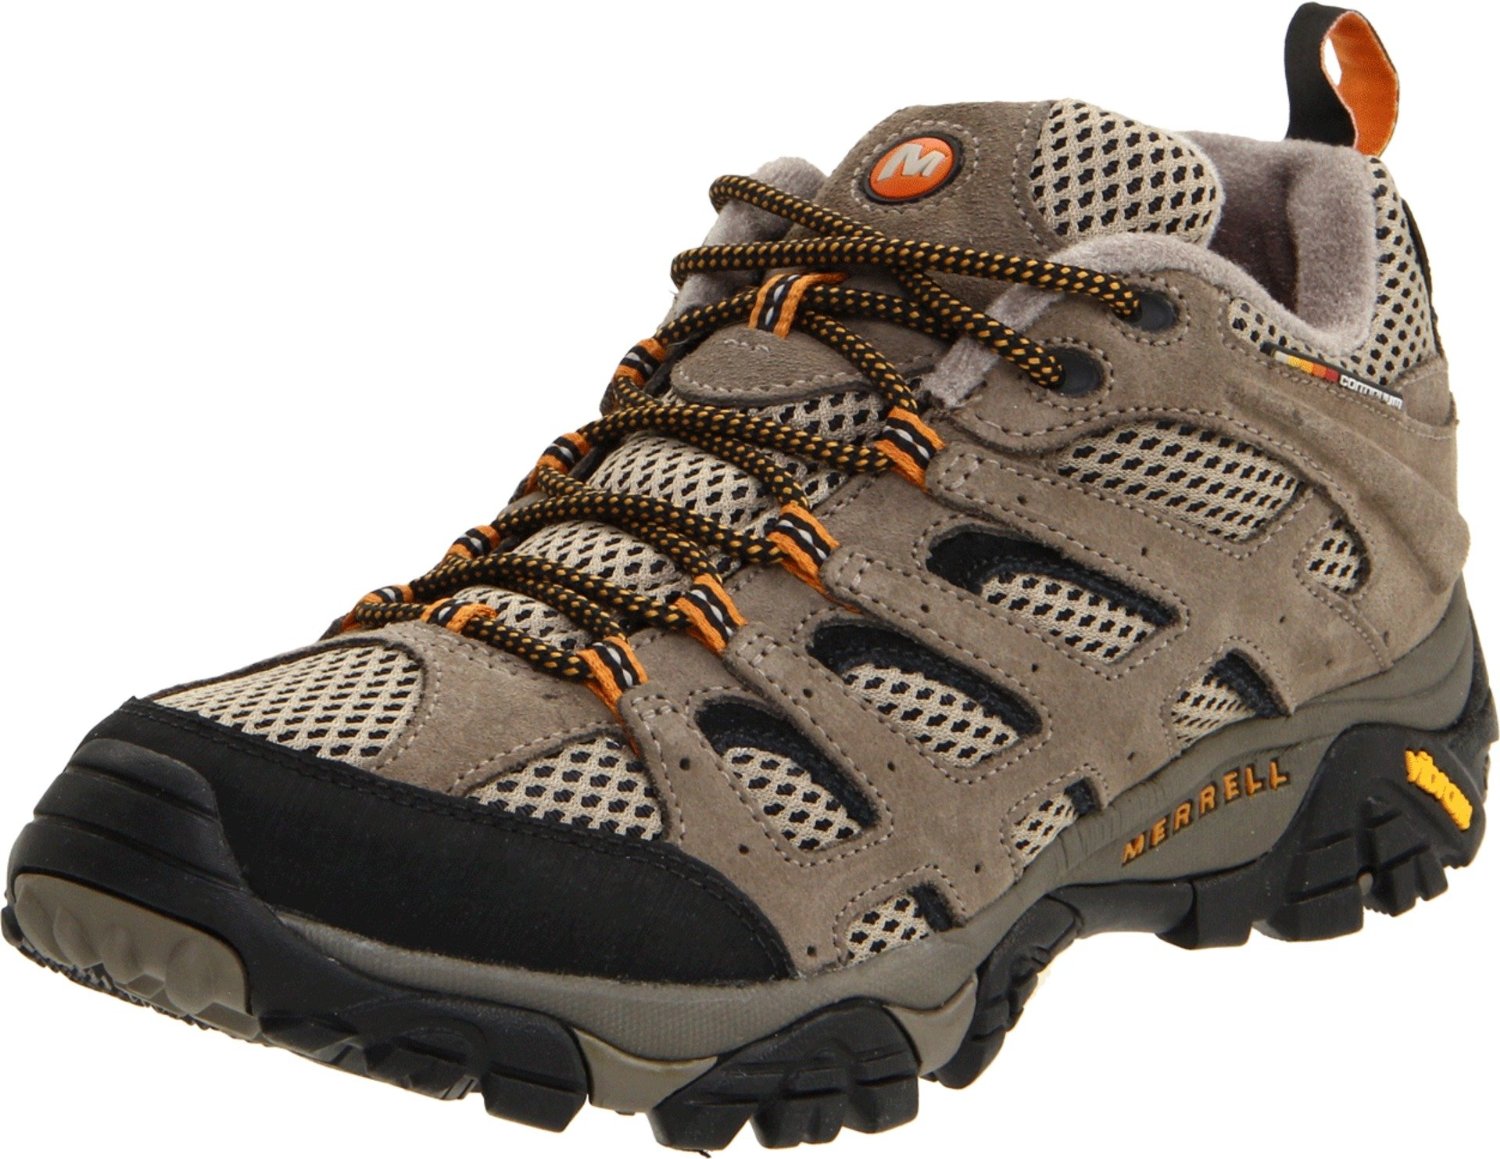 Hiking Shoes Here: Merrell Men's Moab Ventilator Hiking Shoe